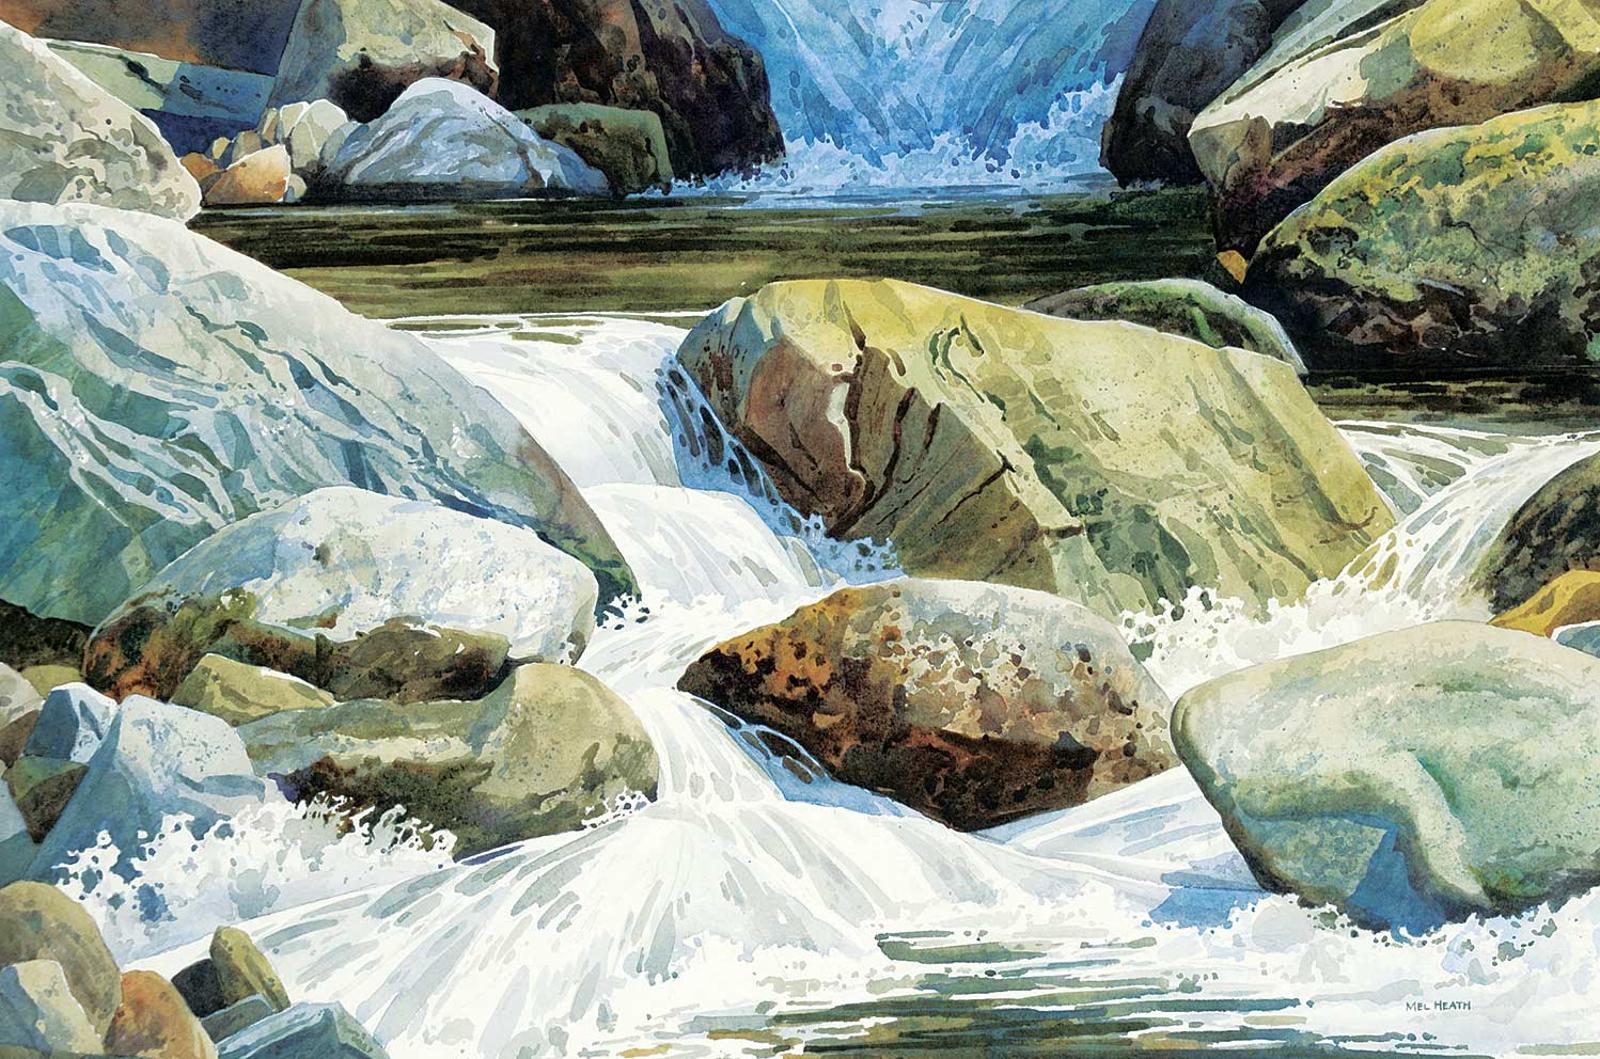 Melvin George Heath (1930) - Below the Falls